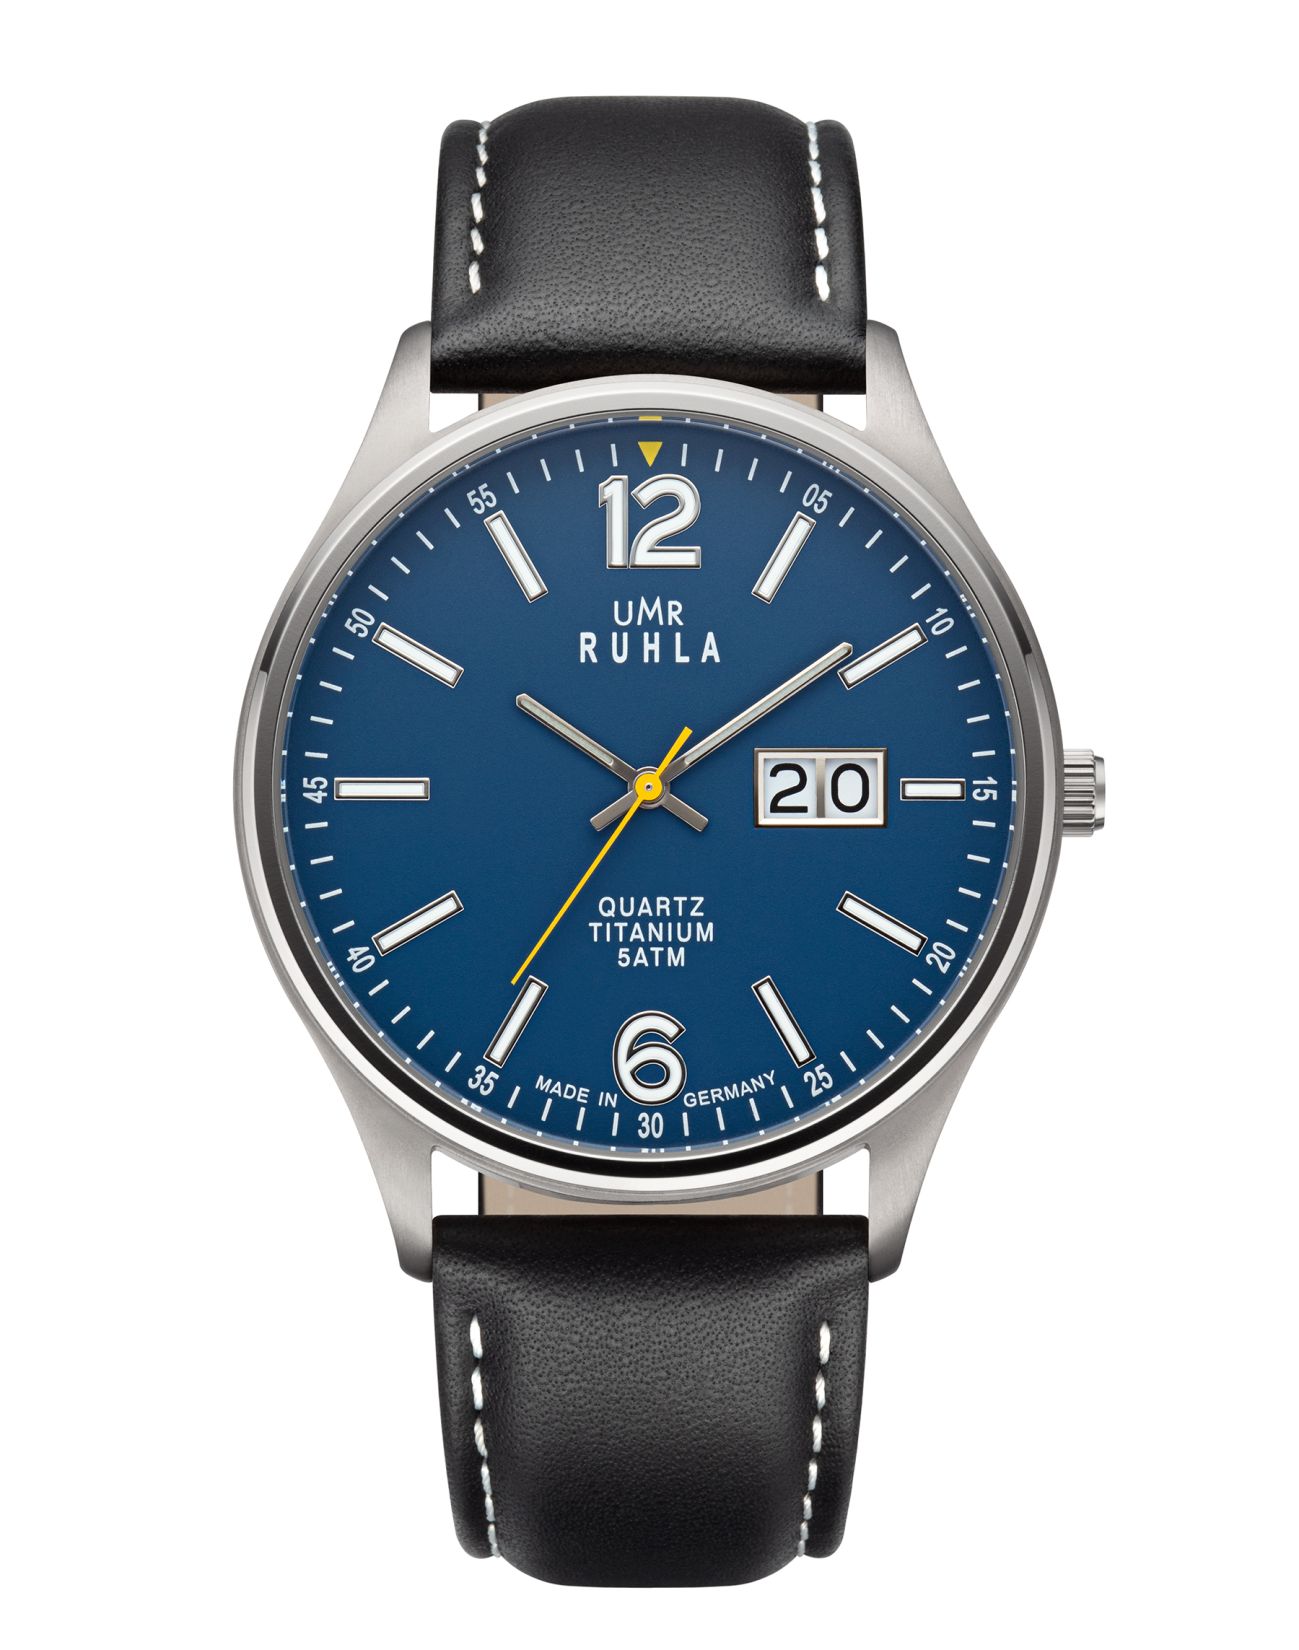 Uhren Manufaktur Ruhla - Armbanduhr Big Date blau - made in Germany